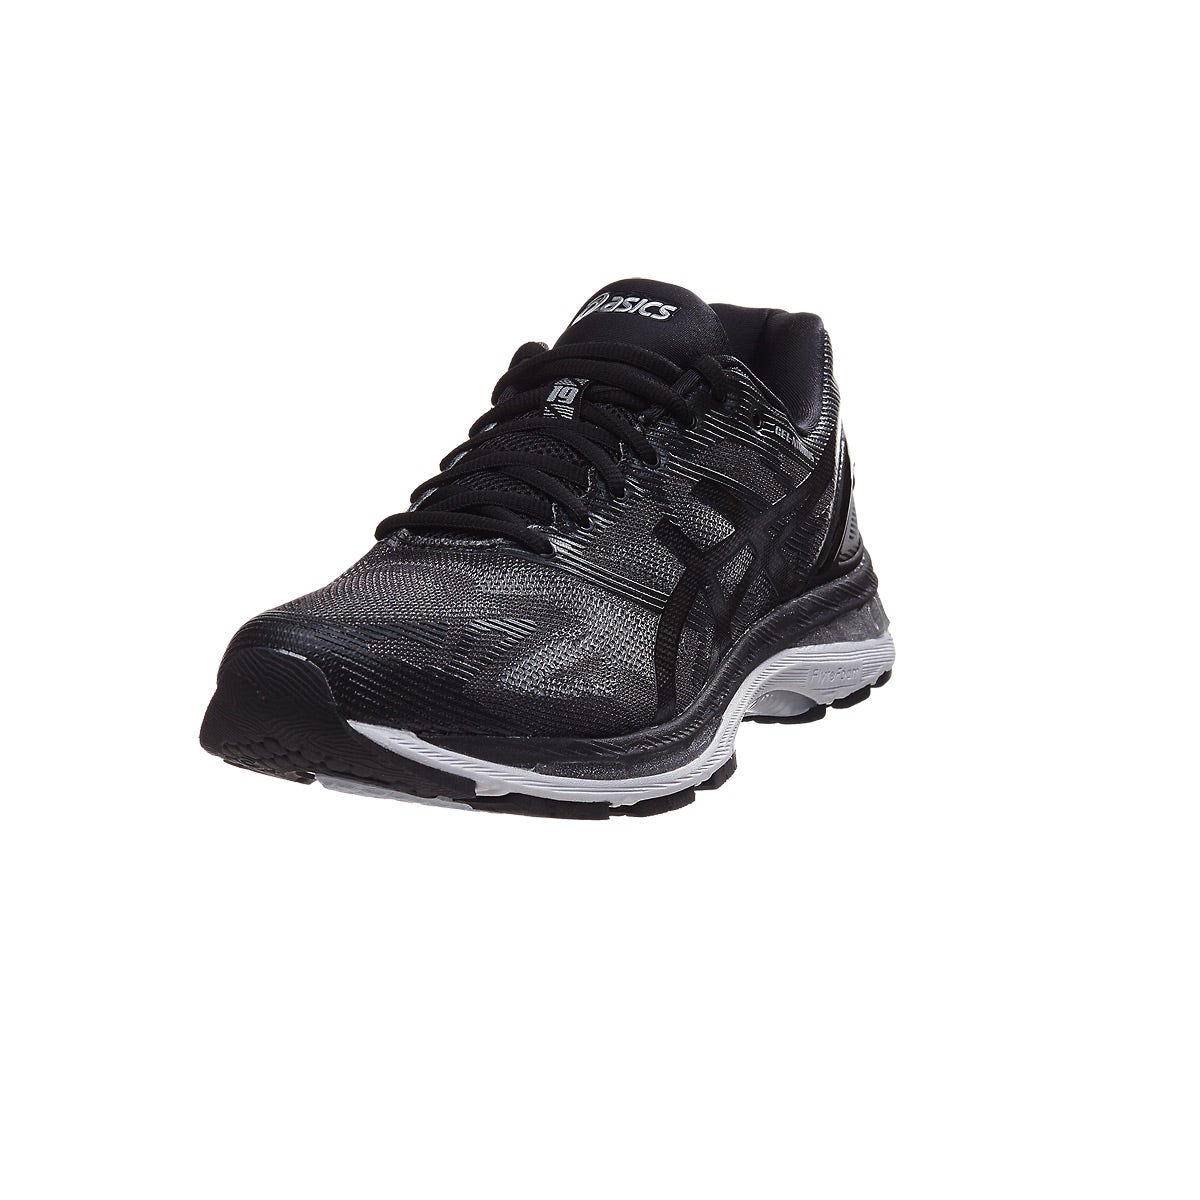 asics gel nimbus 19 men's shoes black/onyx/silver